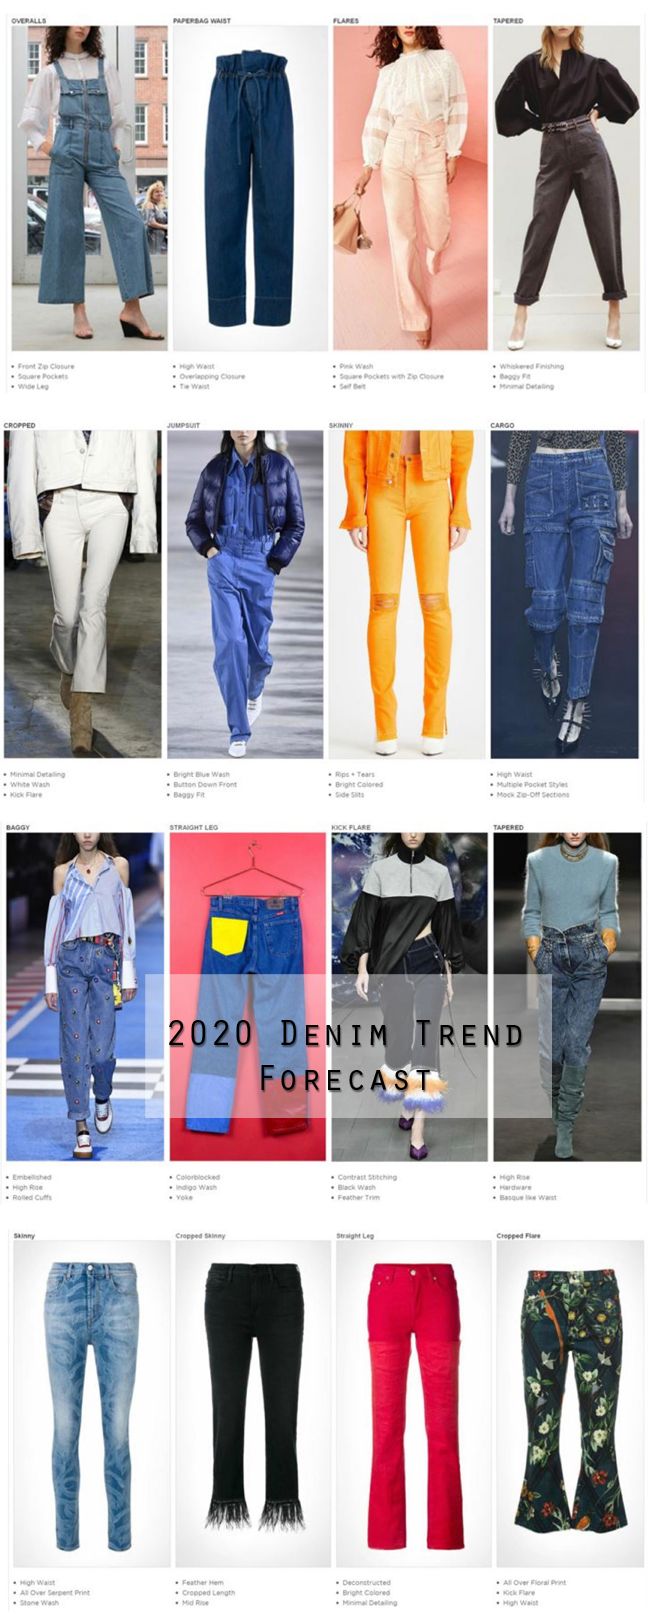 2020 denim trend forecast via Fashion Snoops on The Key To Chic